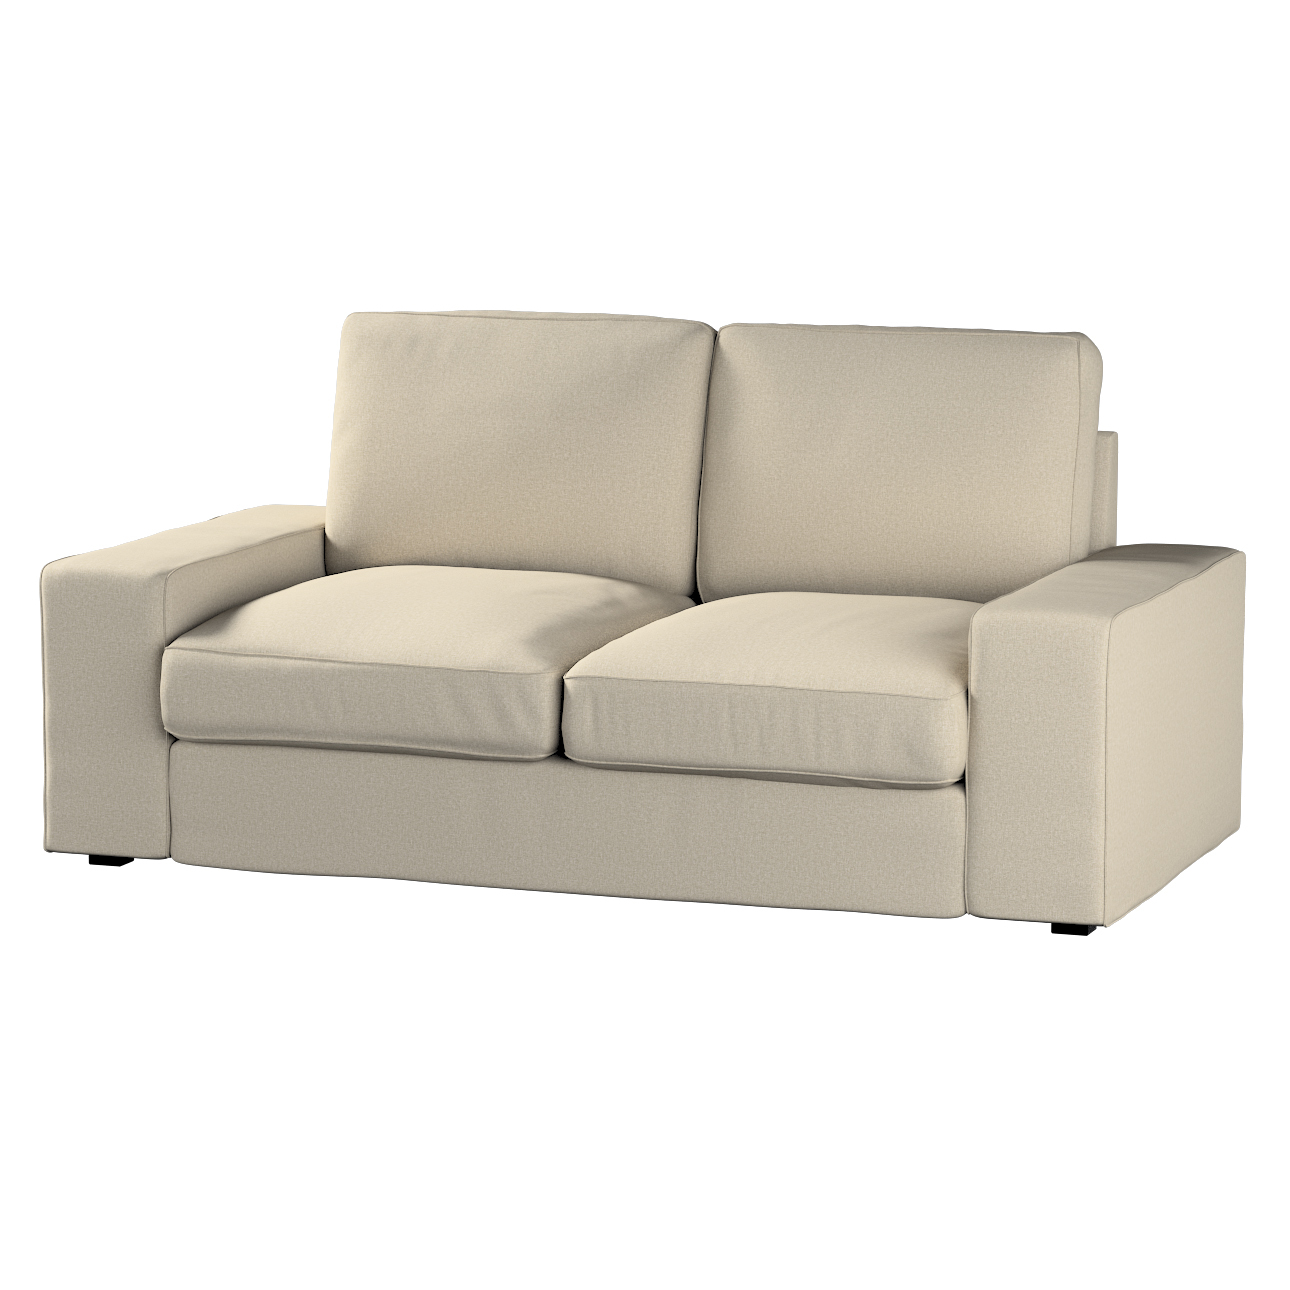 Bezug für Kivik 2-Sitzer Sofa, grau-beige, Bezug für Sofa Kivik 2-Sitzer, A günstig online kaufen